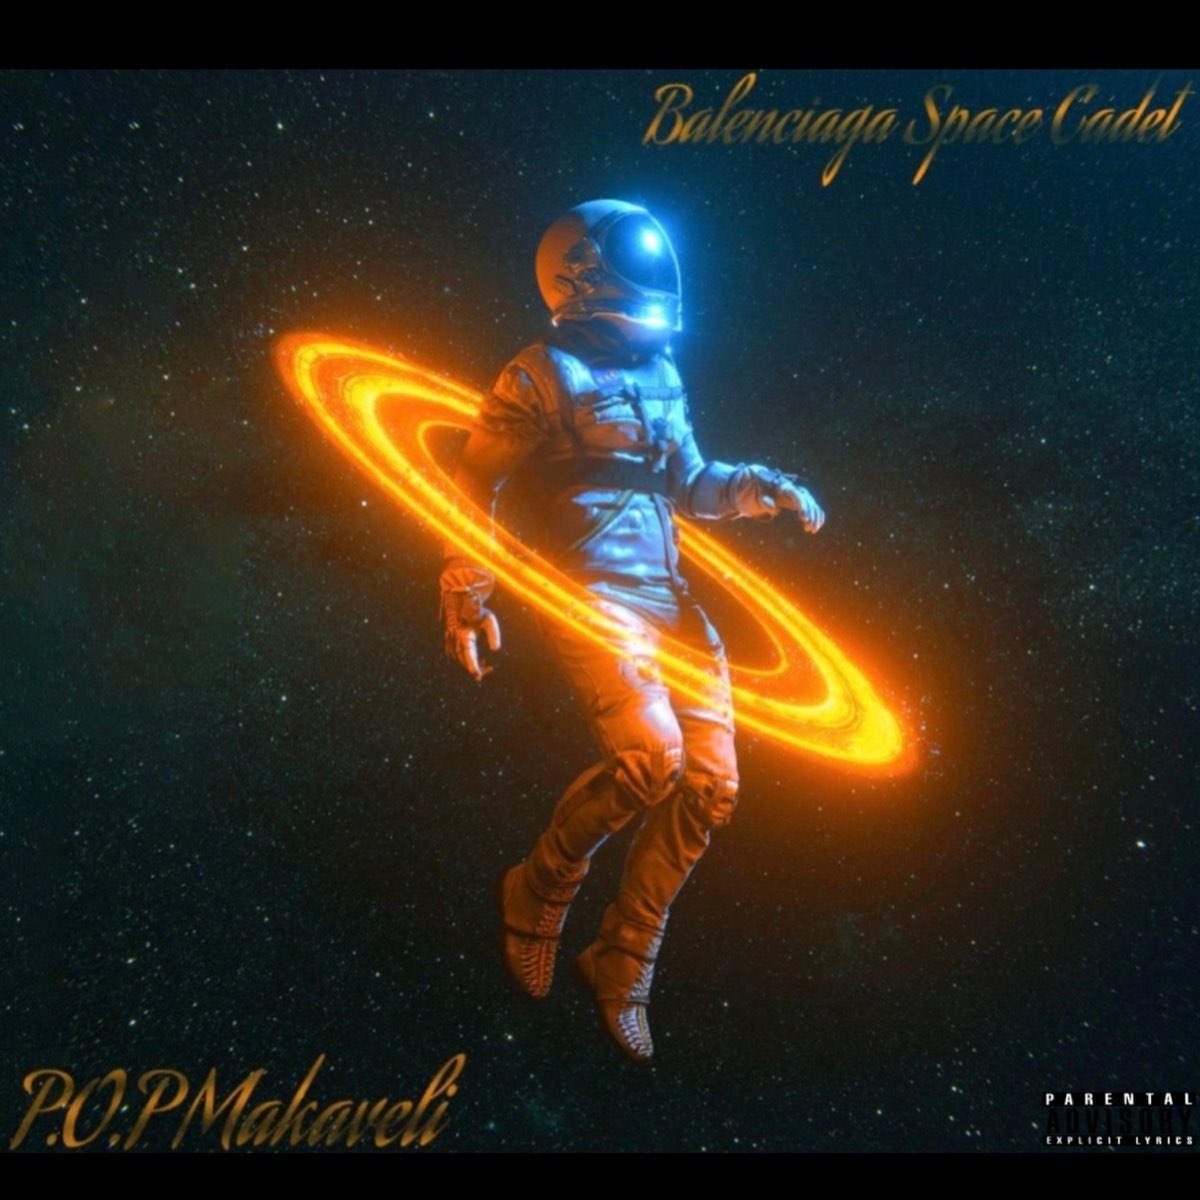 Balenciaga Space Cadet (EP) - Album by P.O.P Makaveli Apple